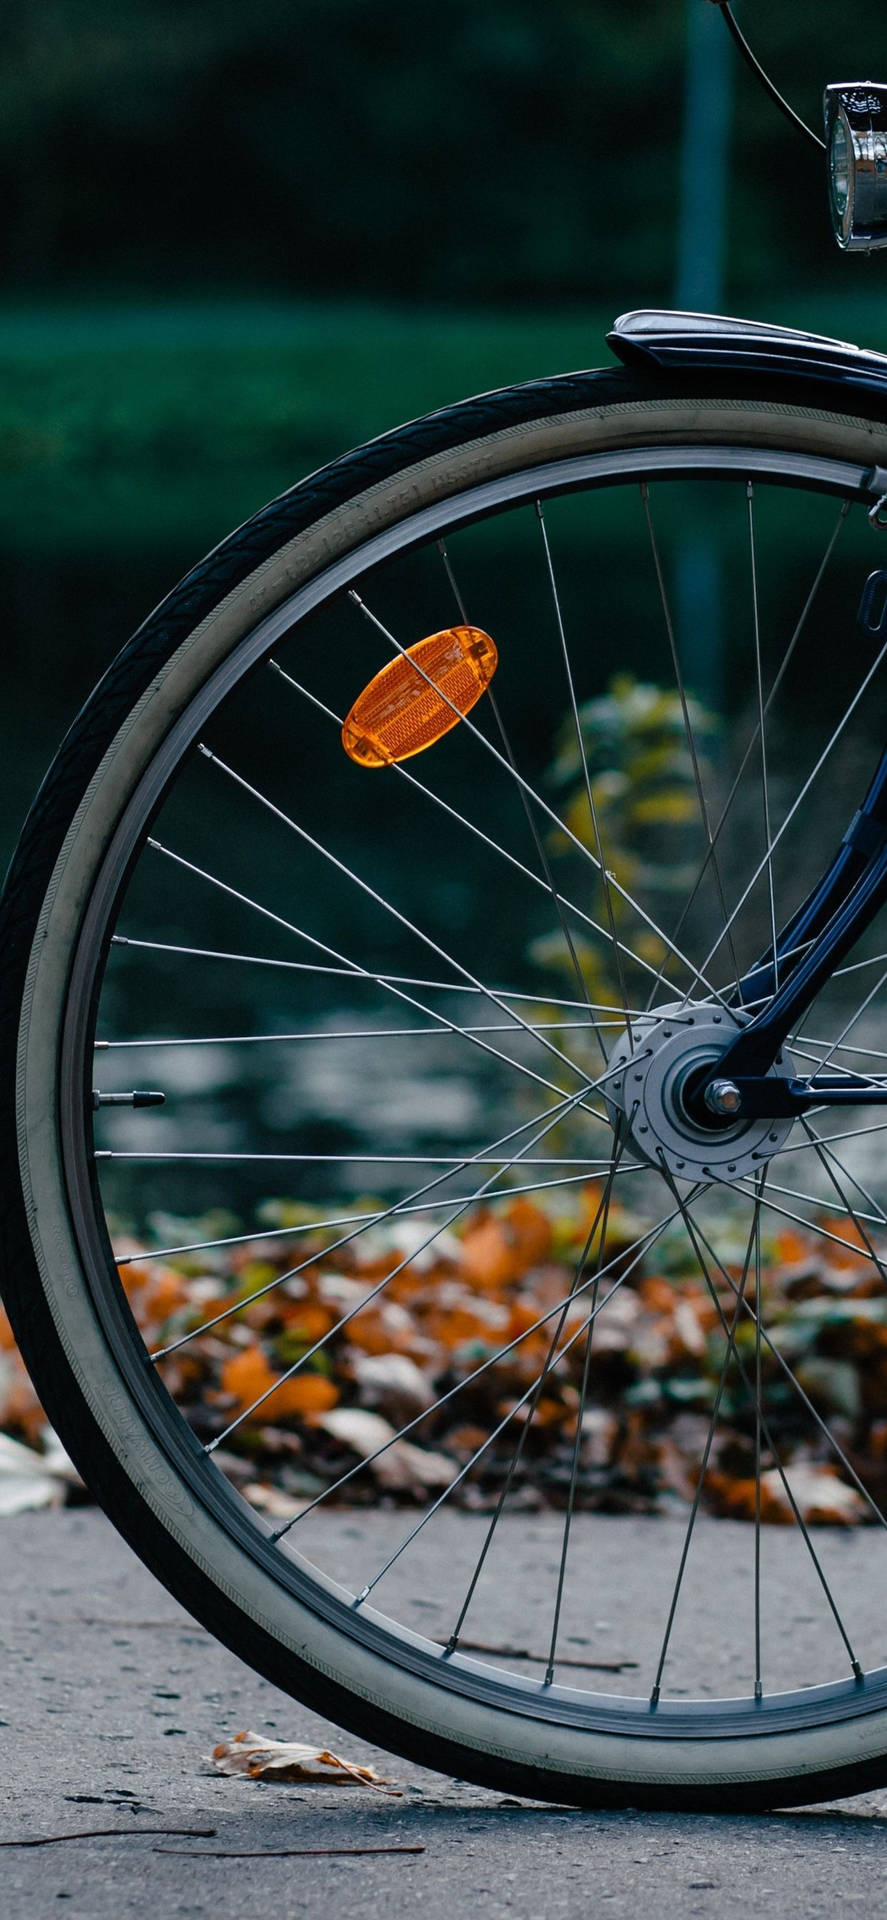 Fascinating Bicycle Iphone Wheel Bokeh Shot Wallpaper